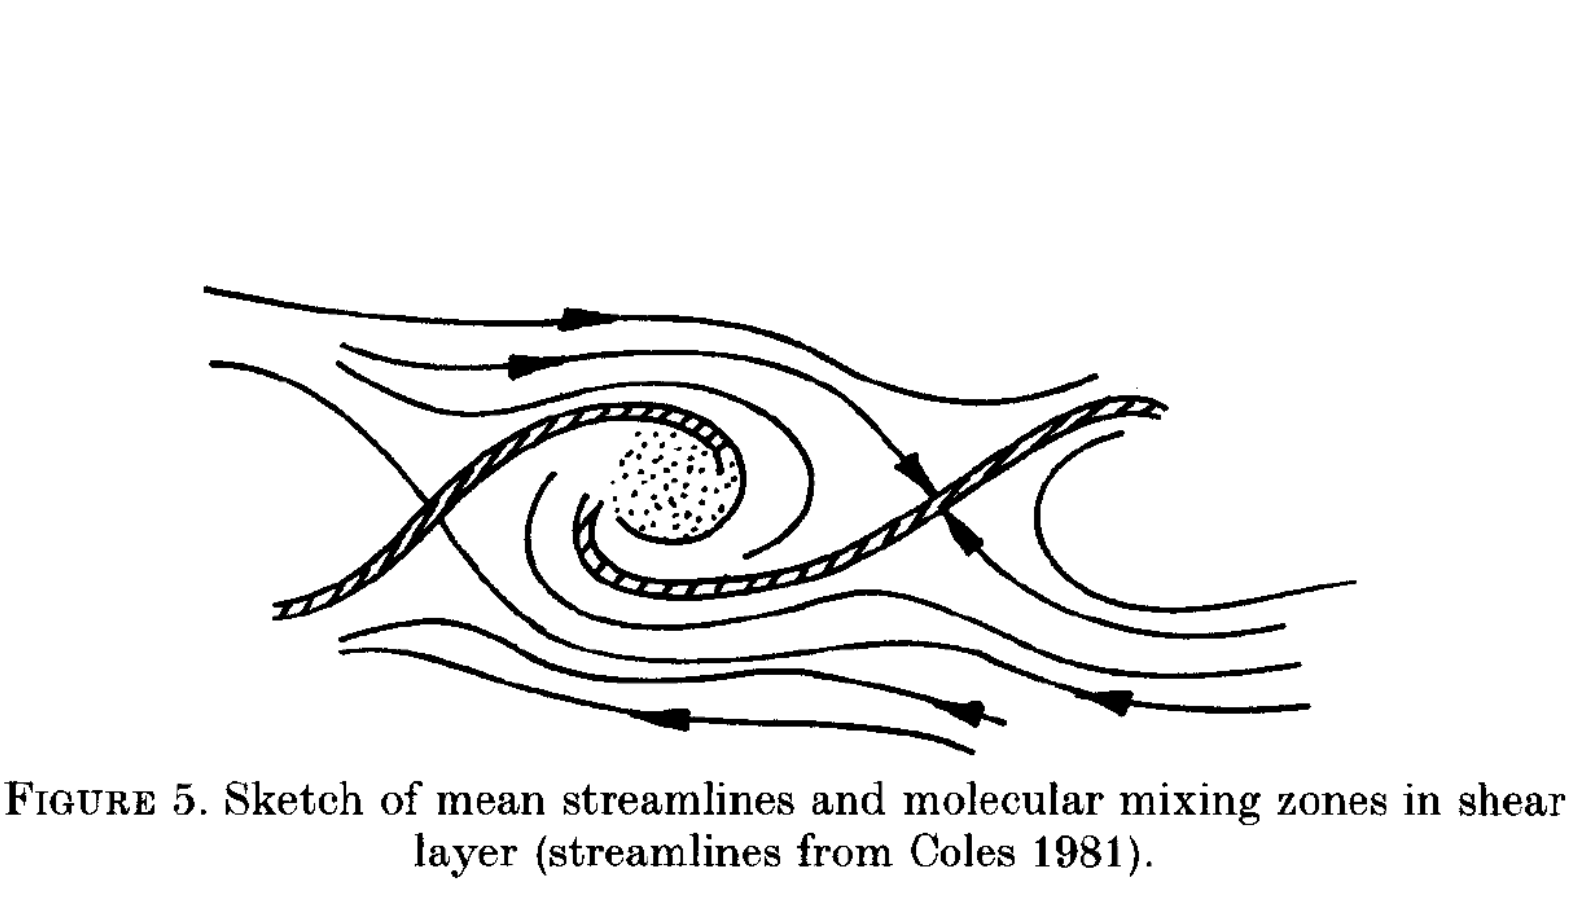 Sketch of mean streamlines